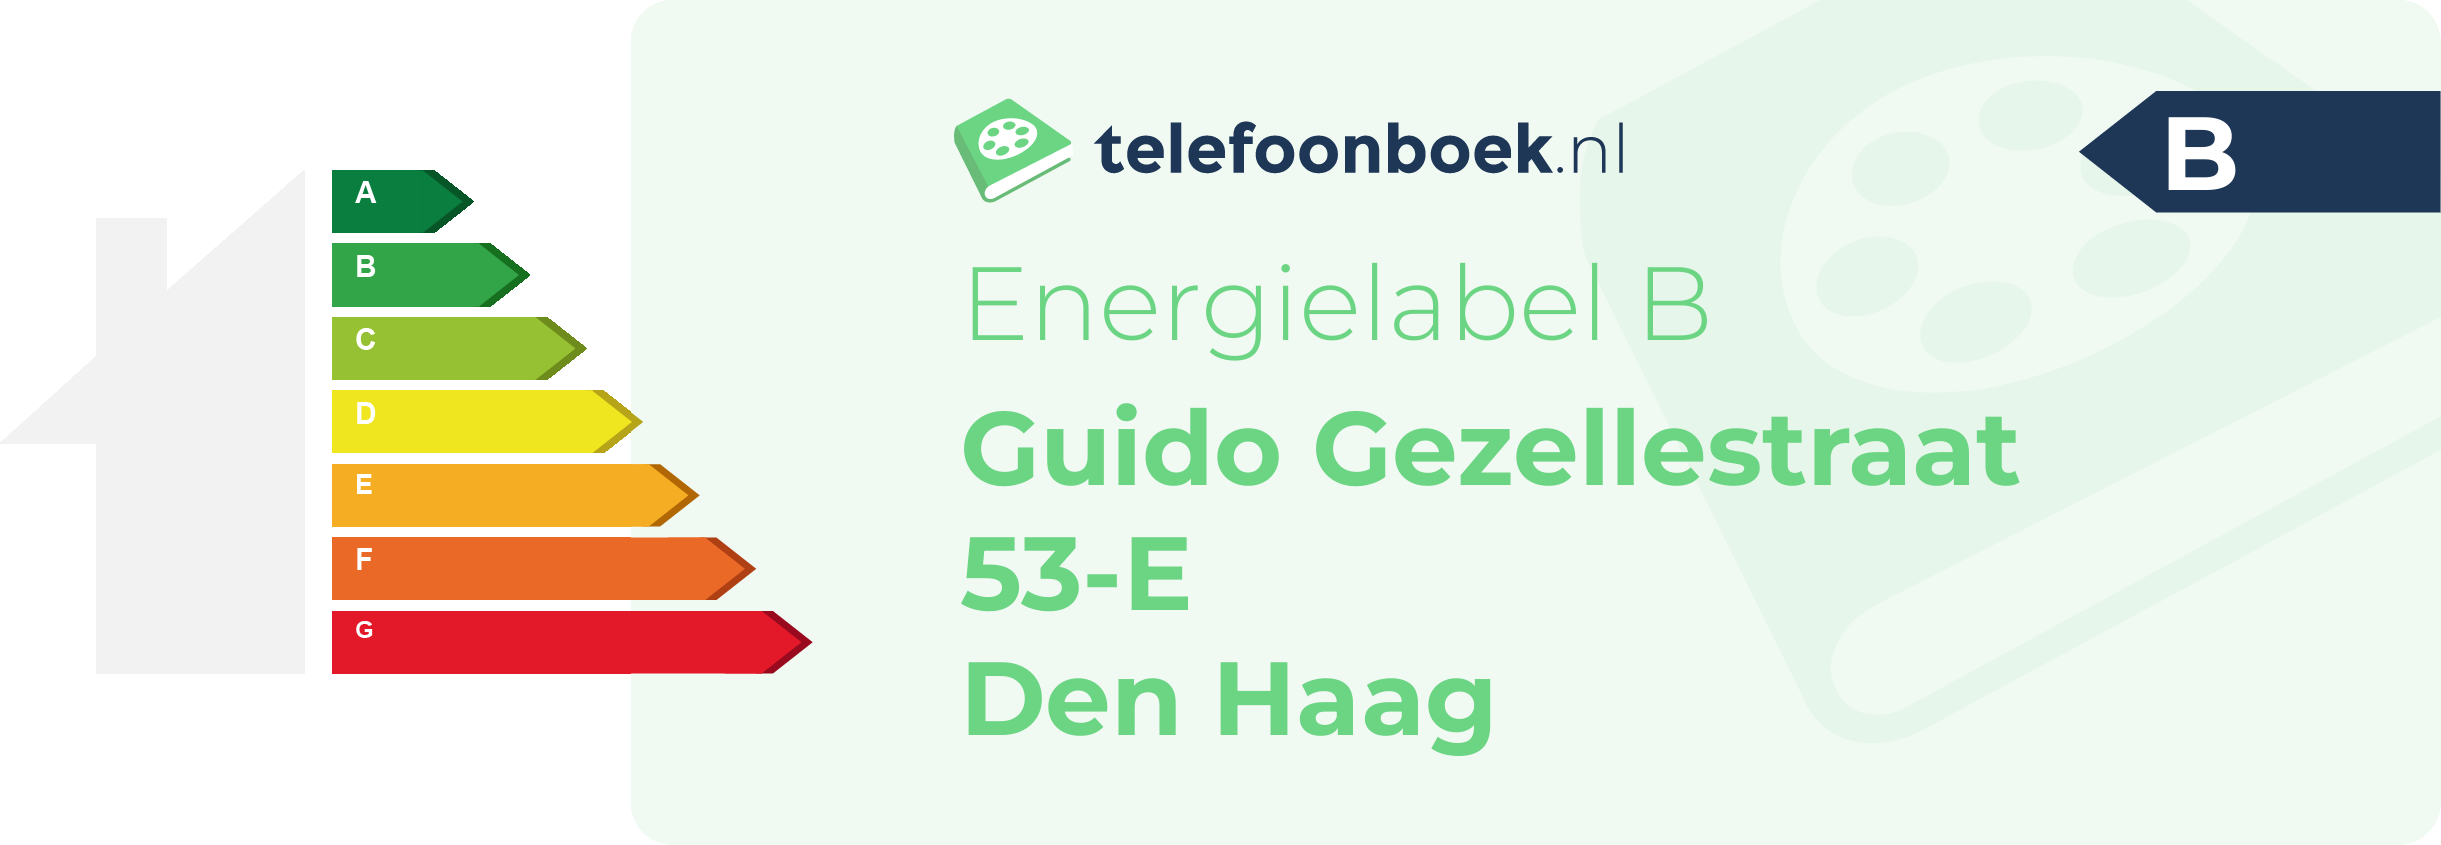 Energielabel Guido Gezellestraat 53-E Den Haag